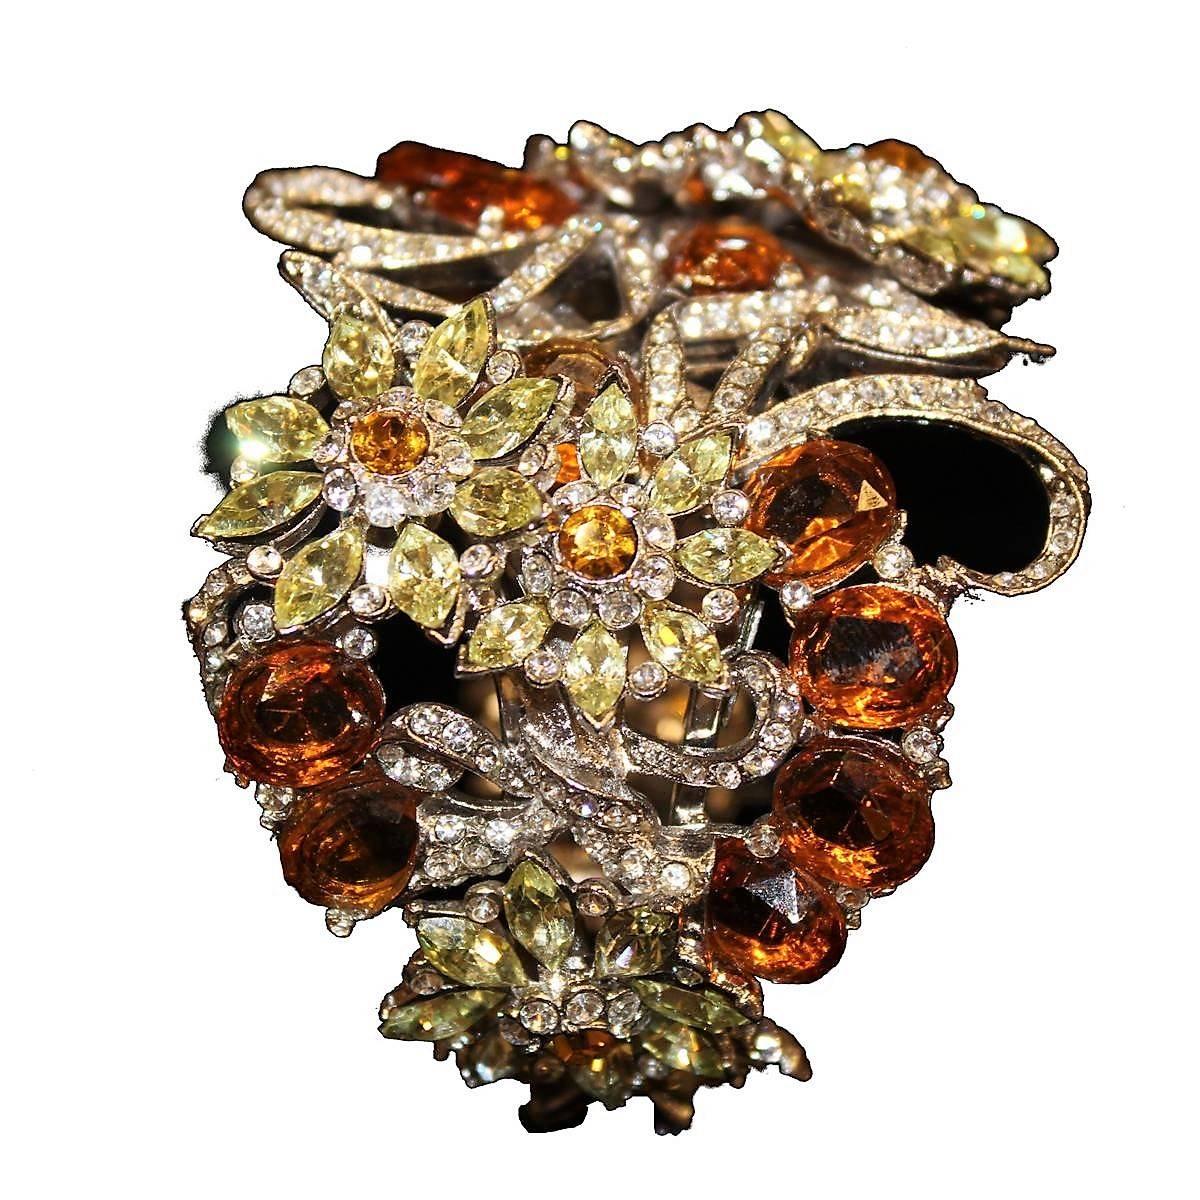 Amazing Carlo Zini bijoux Milan bracelet
One of the world's best bijoux designers
Non allergenic rhodium
Amazing hand creation of crystals and colored rhinestones
Floral theme
Maximum width cm 6 (2.36 inches)
Wrist size cm 17 (6.7 inches)
Unique